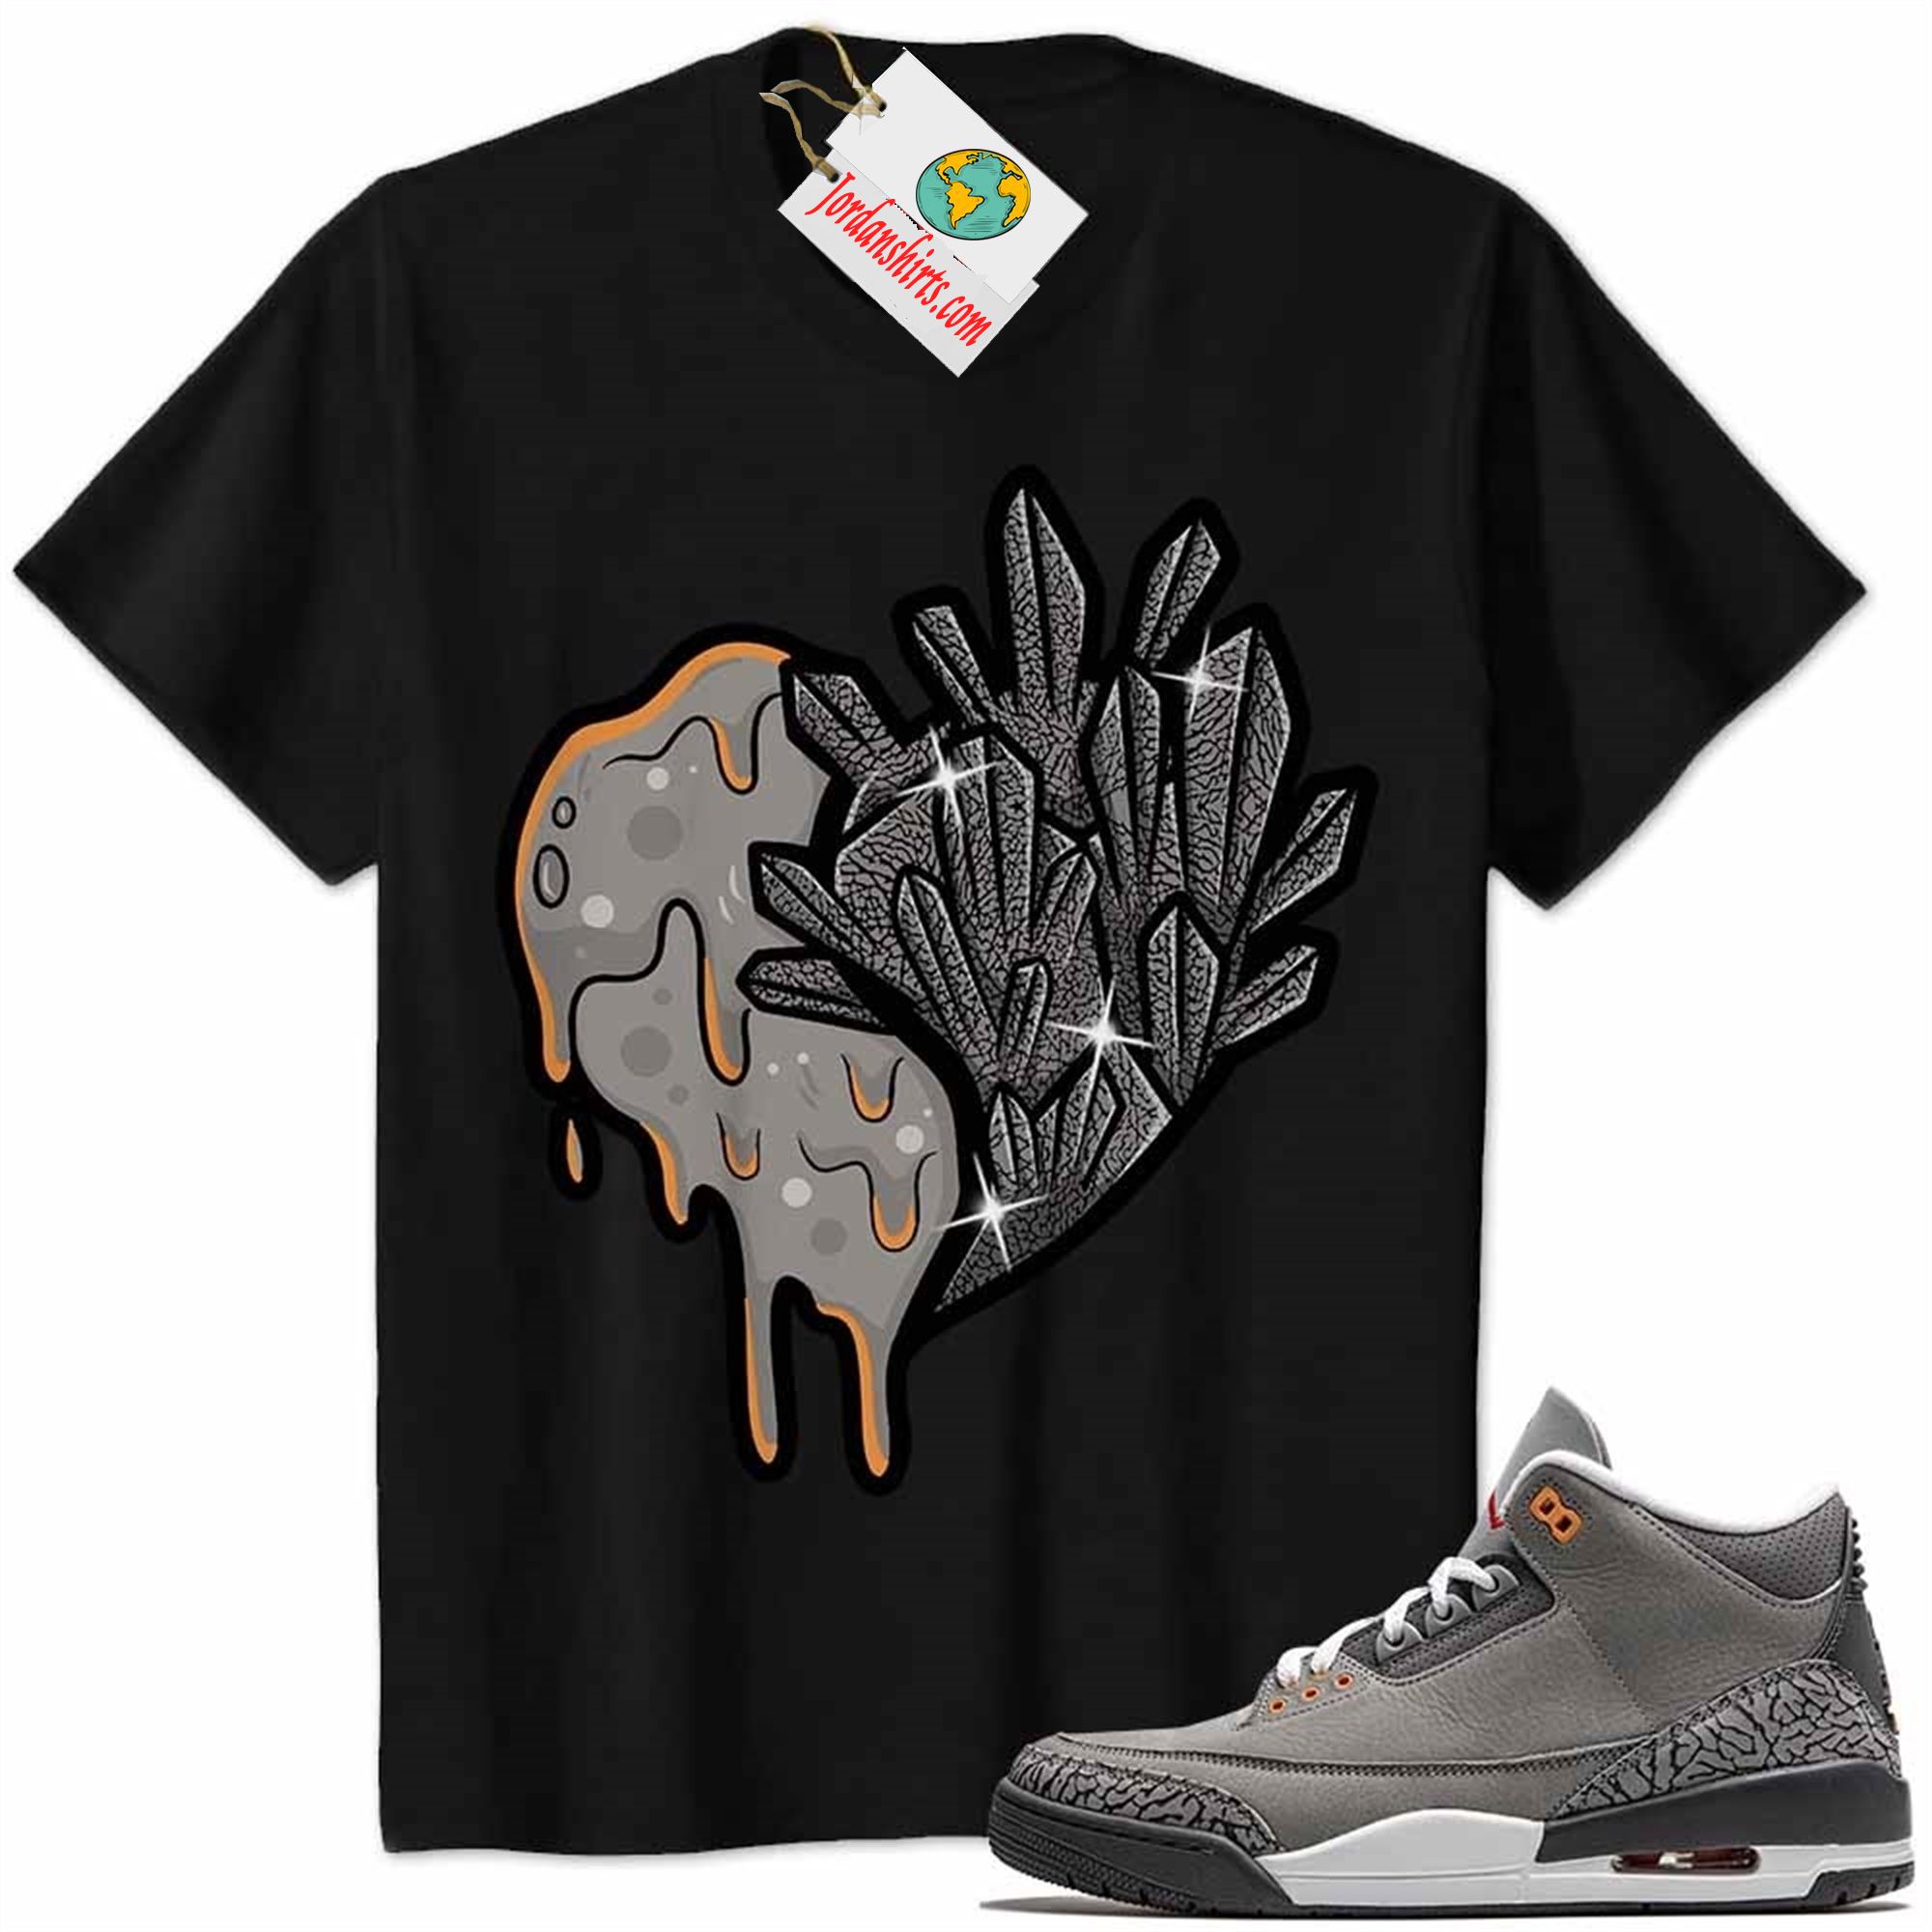 Jordan 3 Shirt, Crystal And Melt Heart Black Air Jordan 3 Cool Grey 3s Full Size Up To 5xl